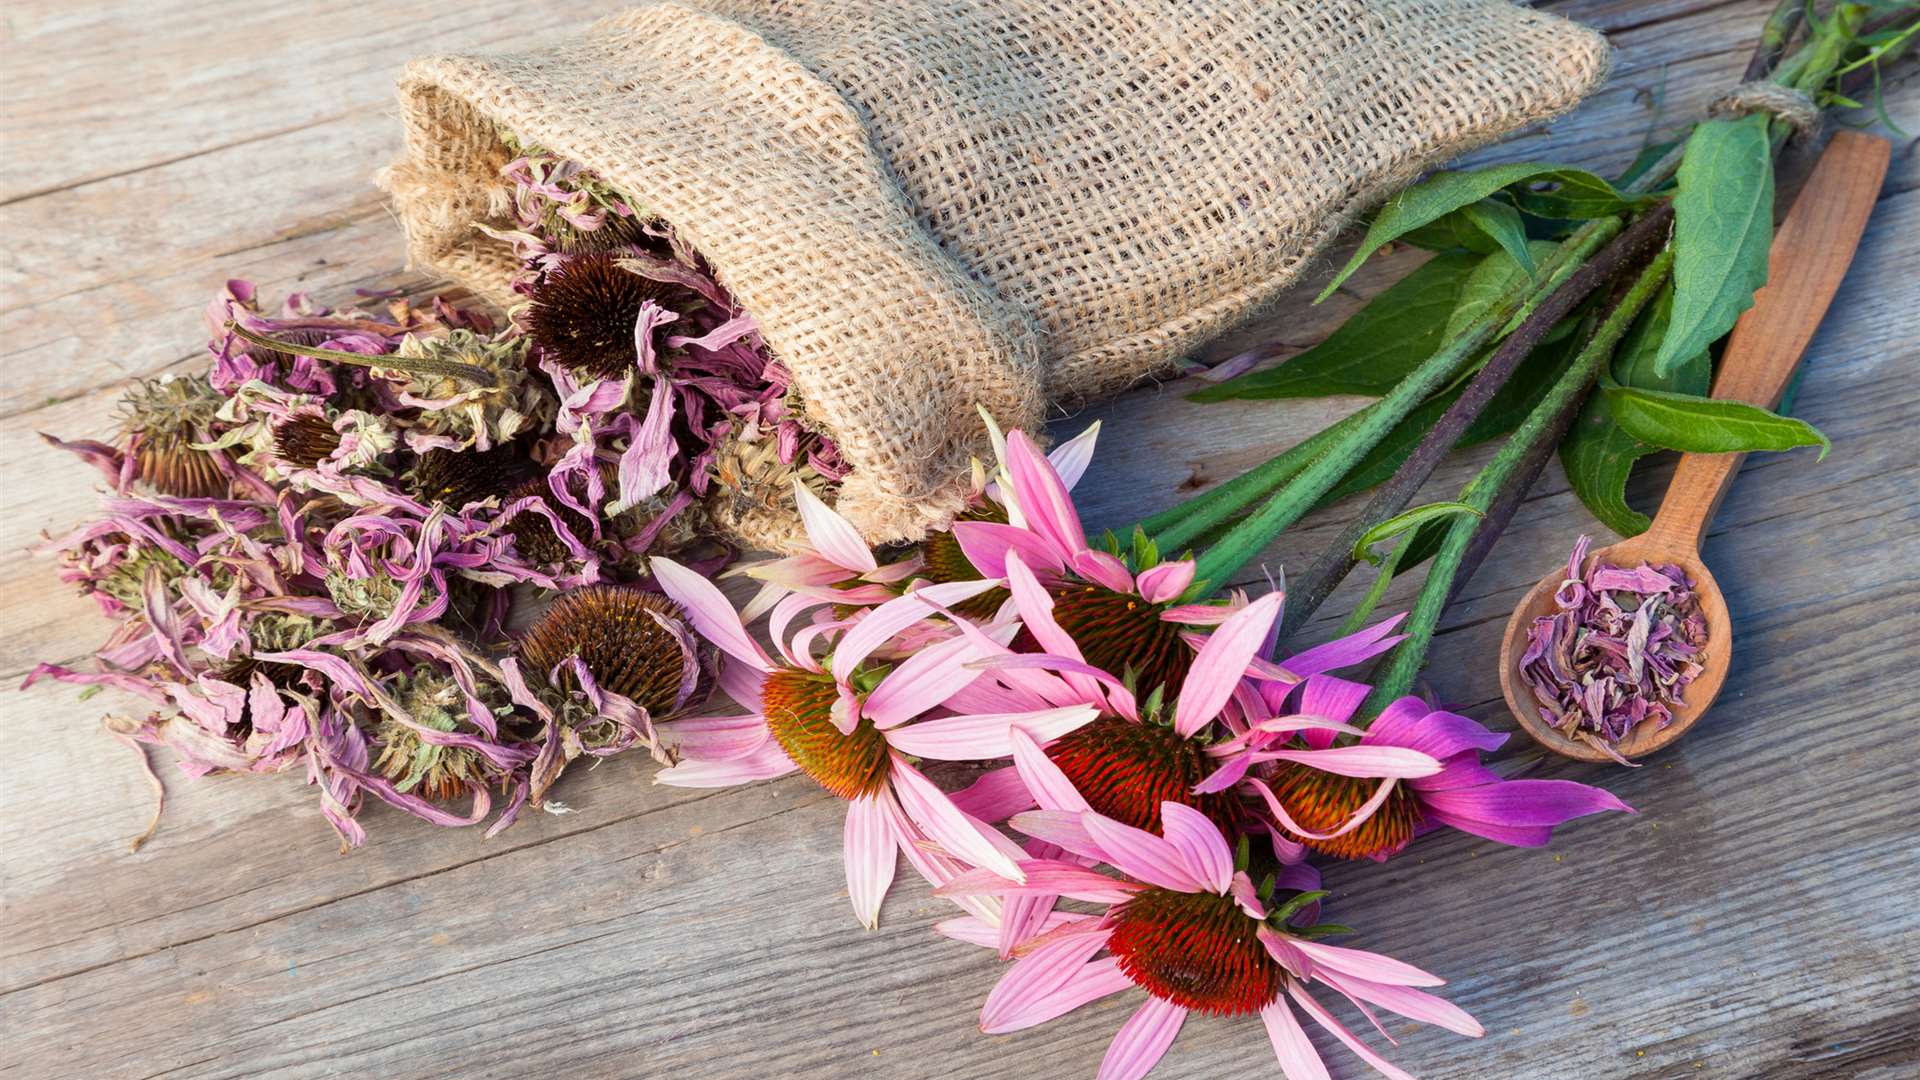 Healing coneflowers and dried echinacea